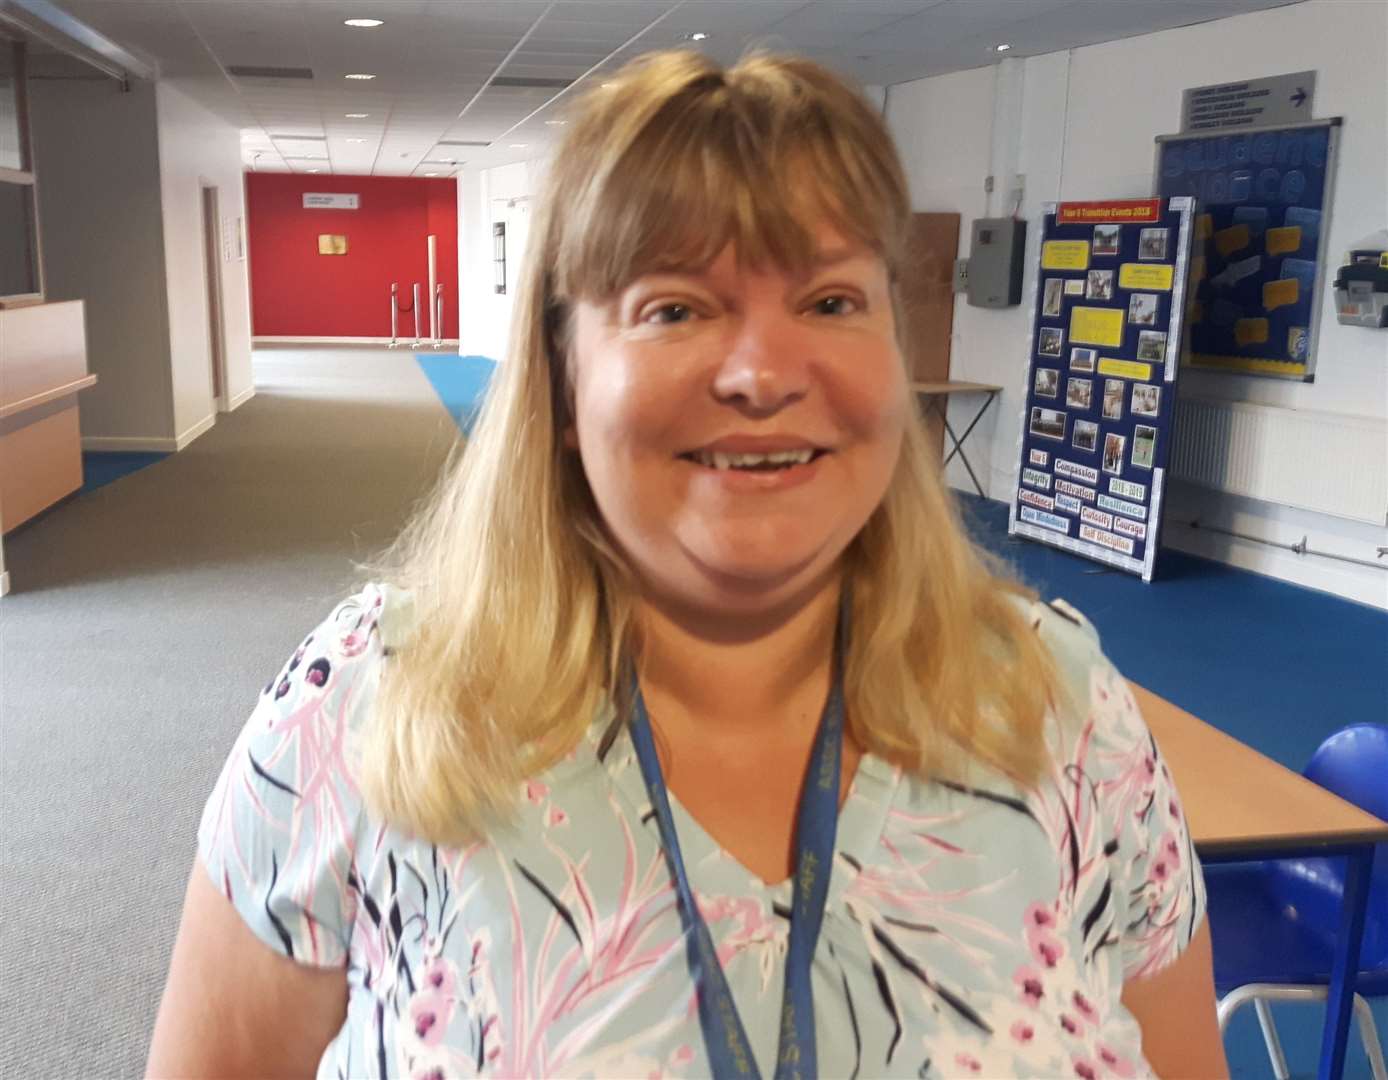 Head teacher Tanya Kelvie sent a letter home to pupils yesterday evening